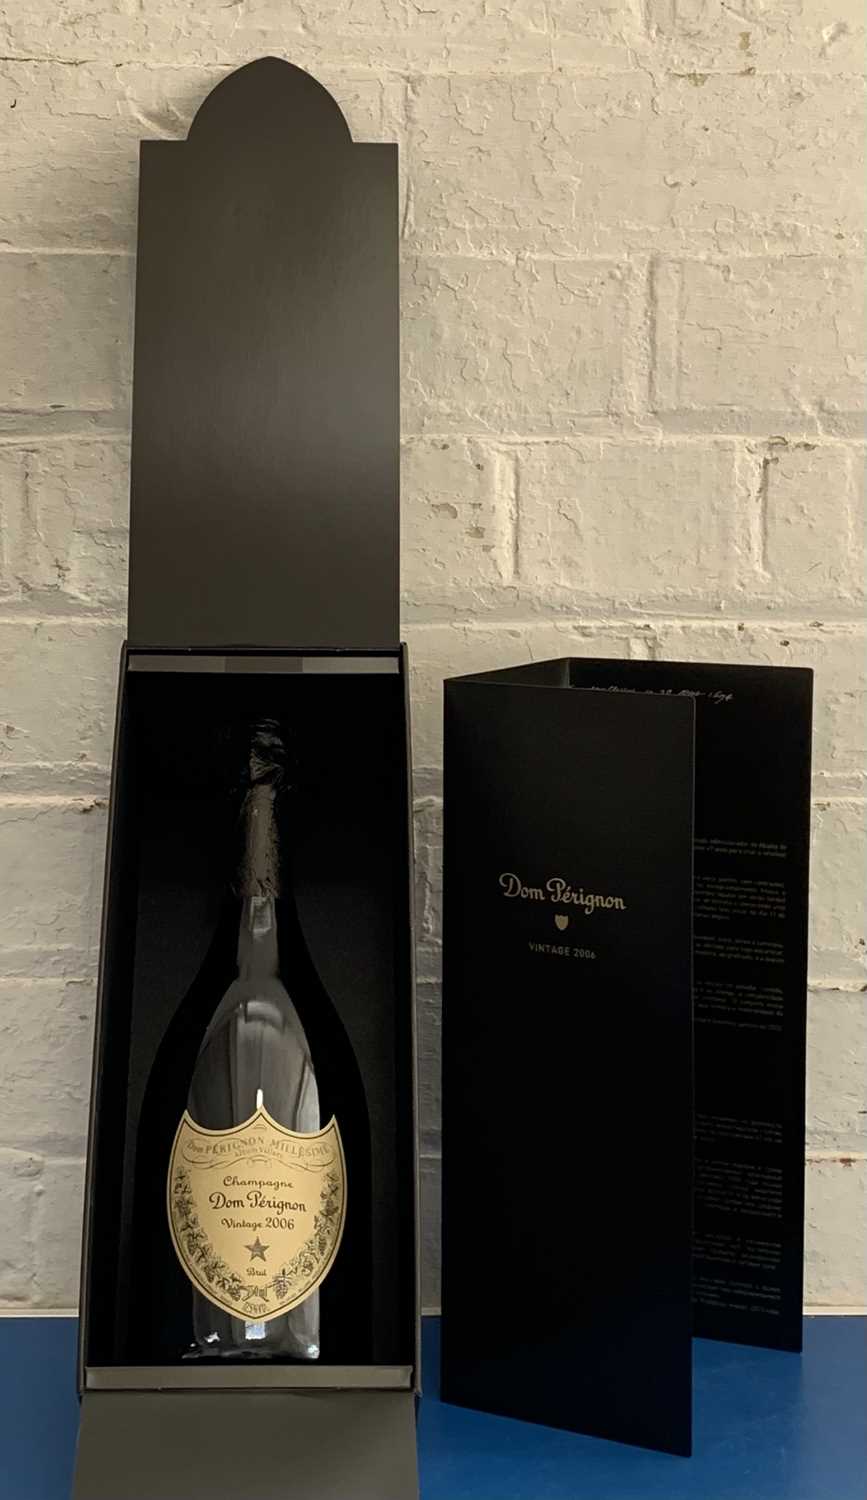 Lot 51 - 1 Bottle Champagne Dom Perignon ‘Altum Villare’ Vintage 2006 (< 1cm. inverted)